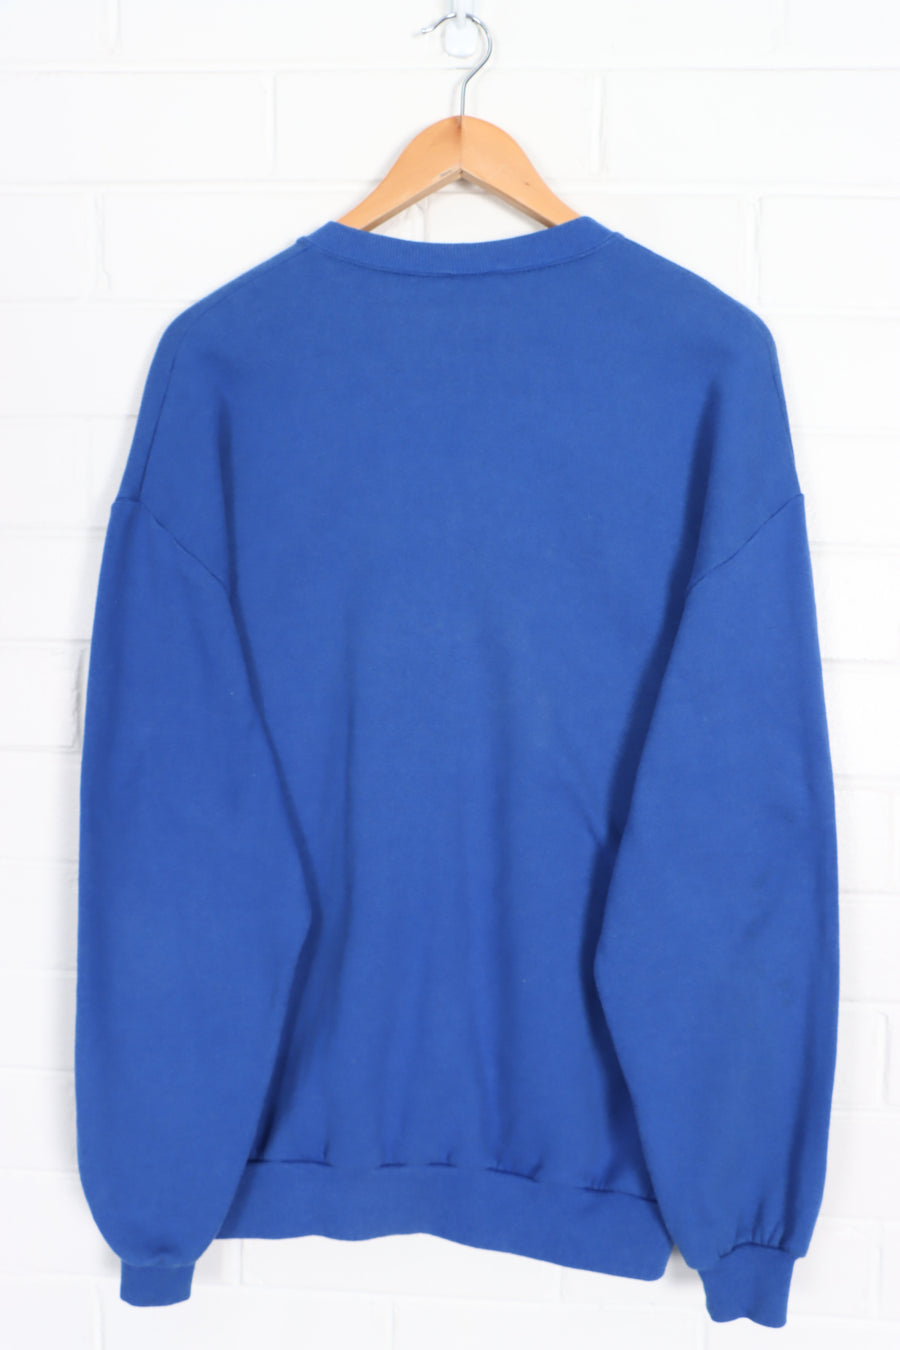 University of Kentucky Wildcats Basketball Blue Sweatshirt USA Made (L)